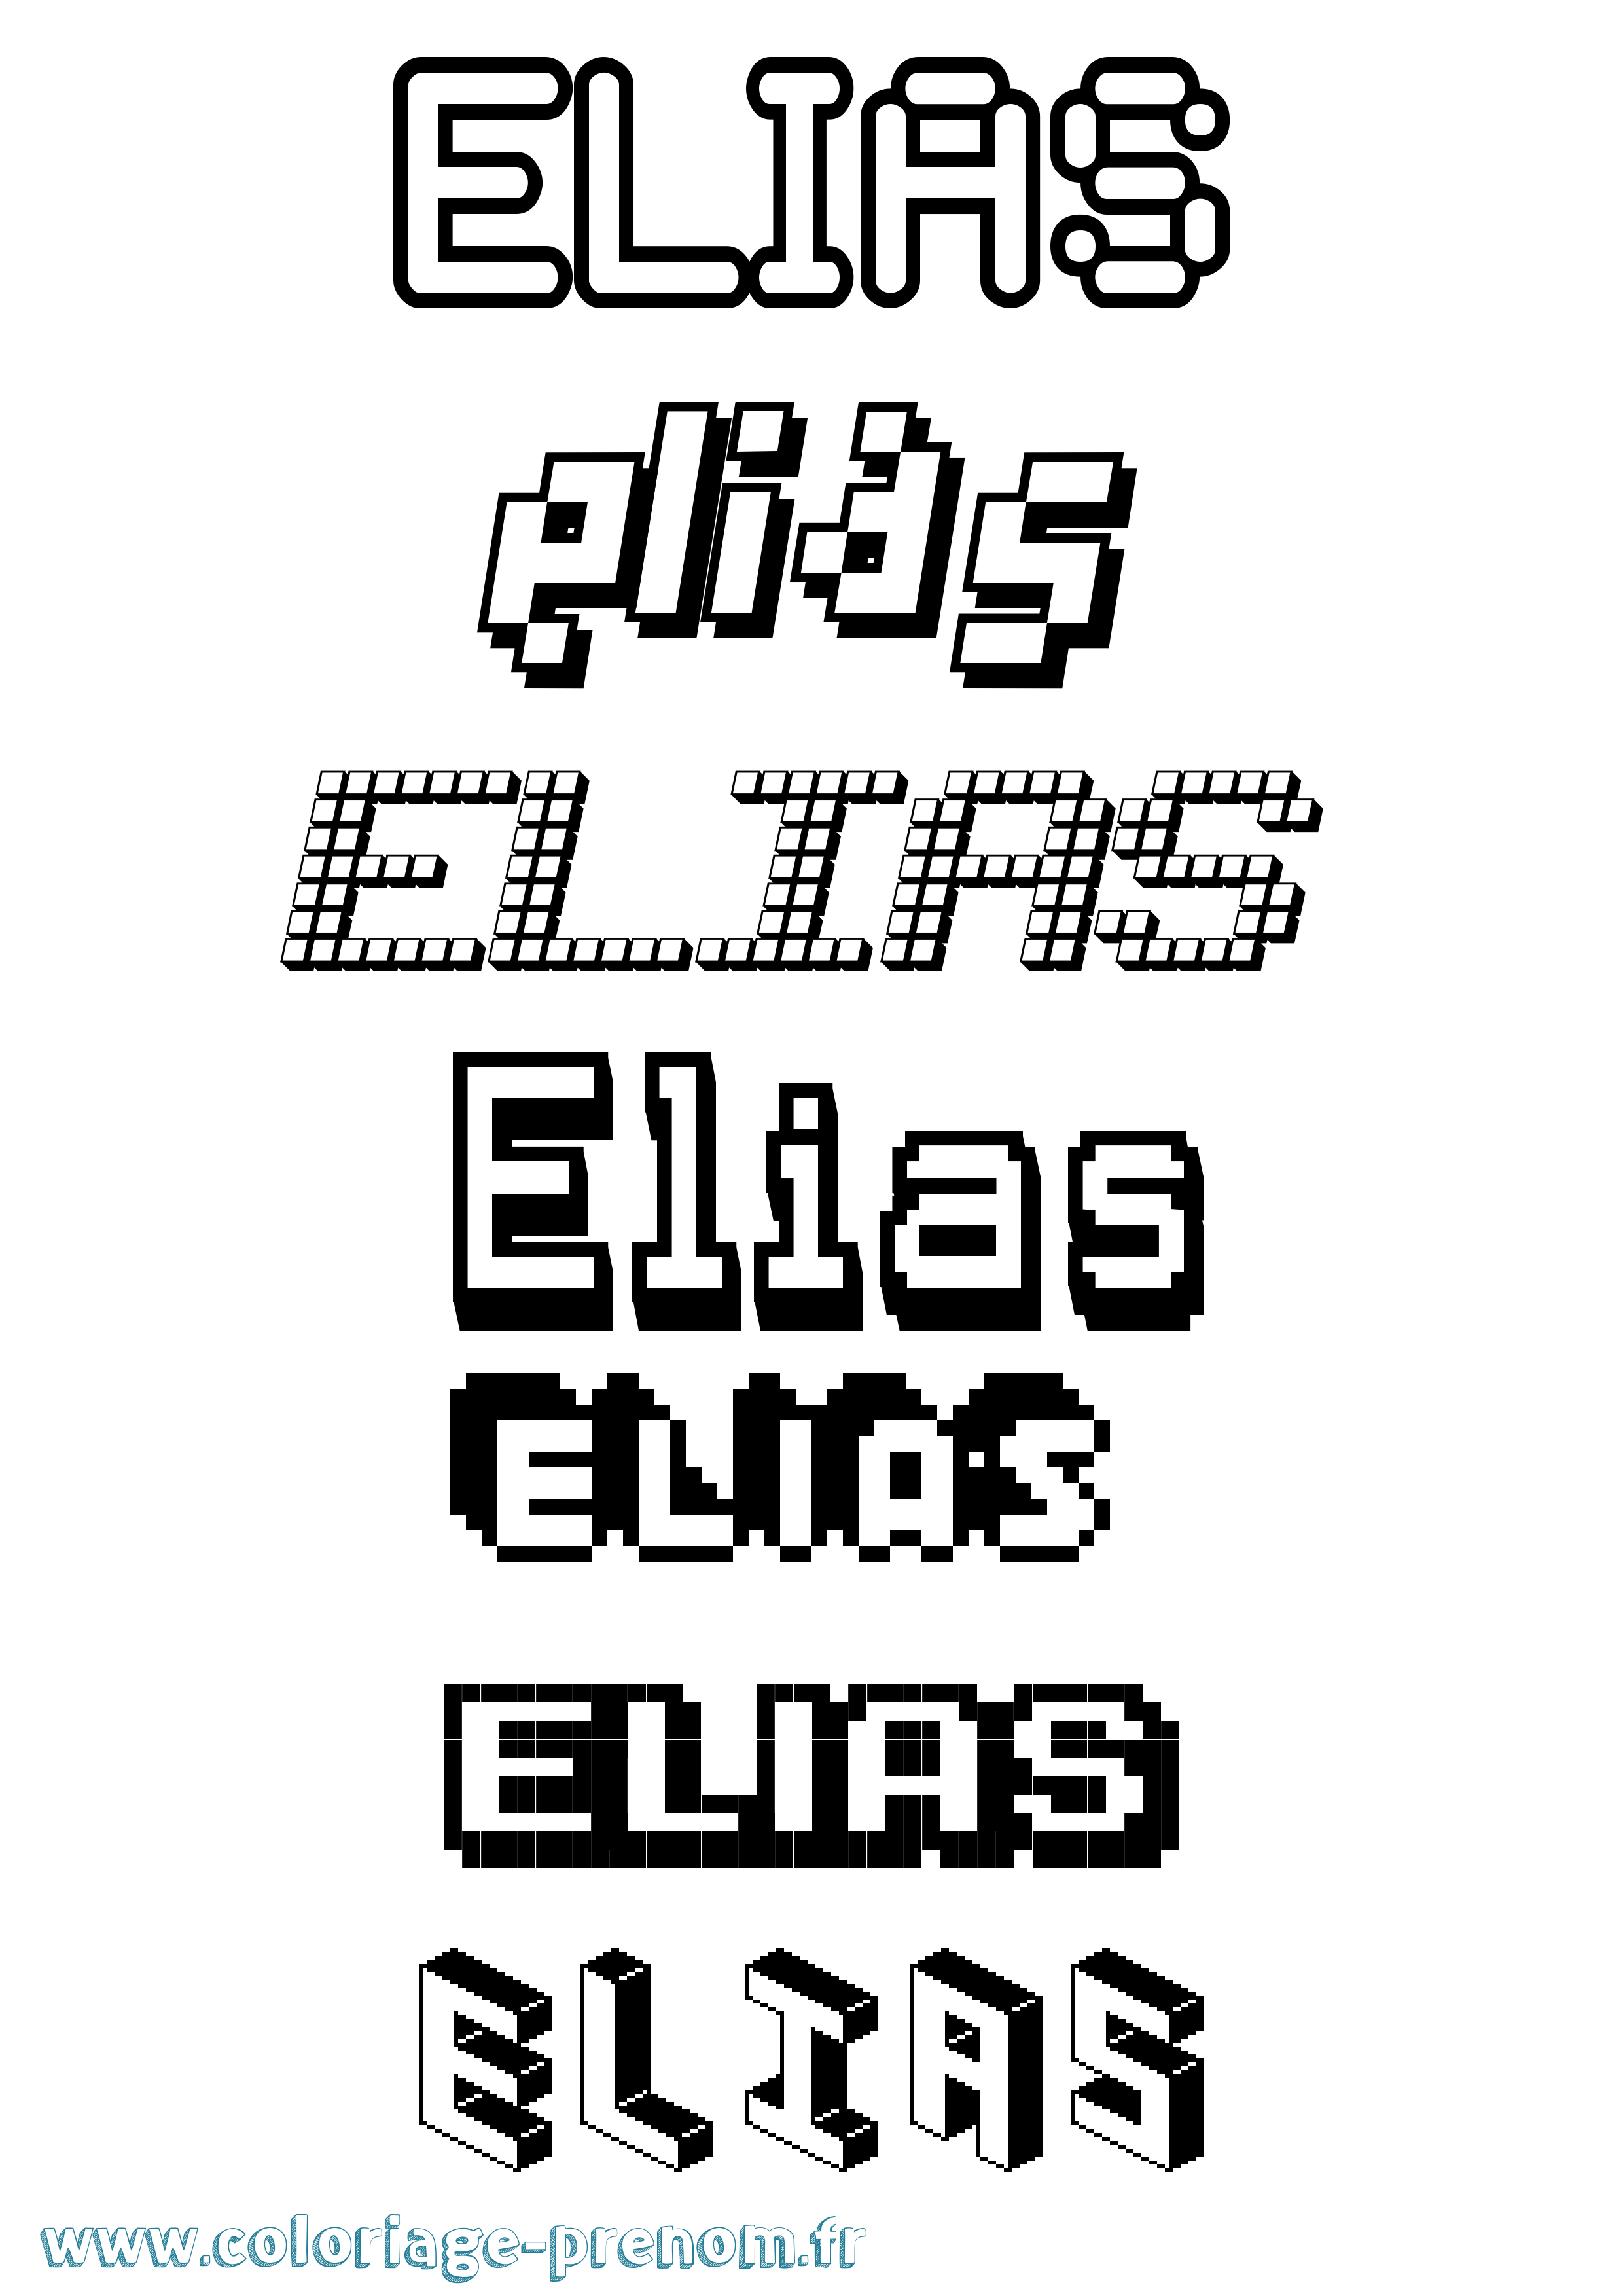 Coloriage prénom Elias Pixel